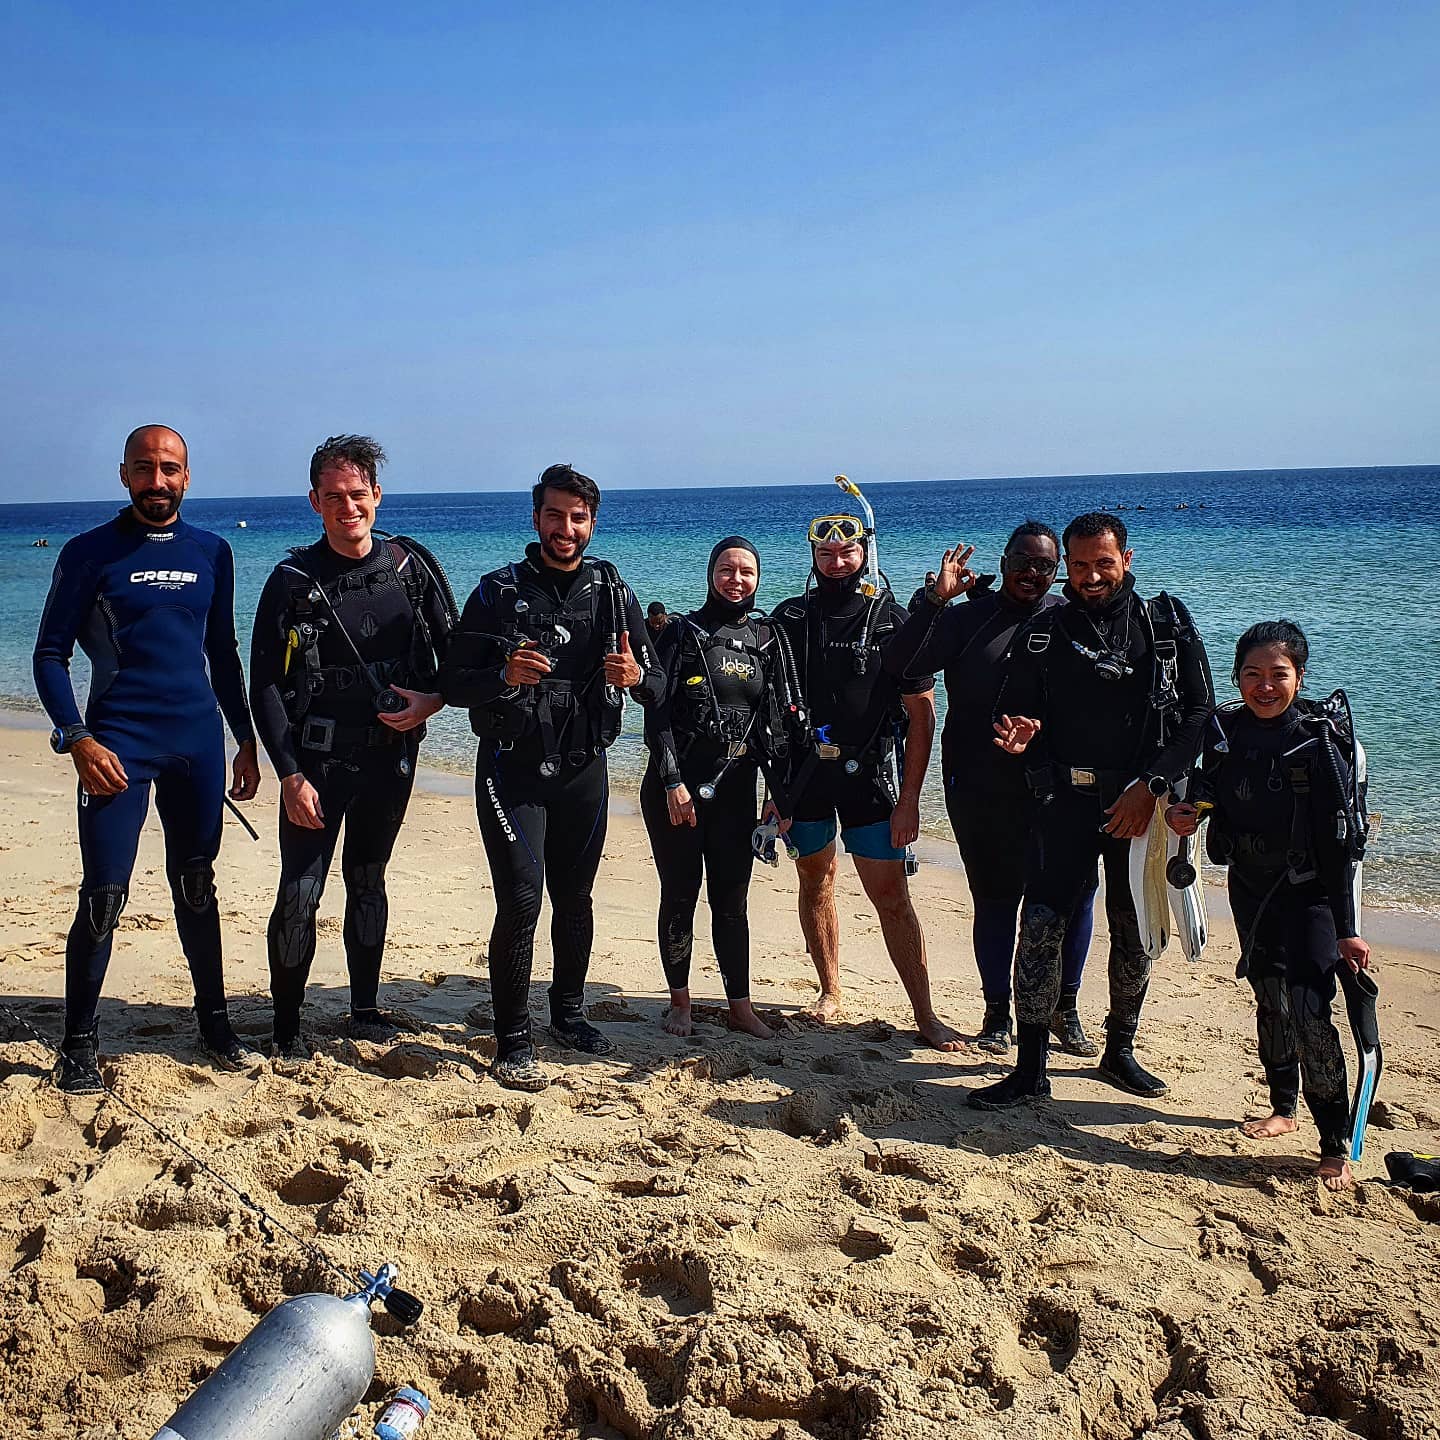 It is training time 😎
#divinginqatar #scuba #scubadiving #openwatercourse